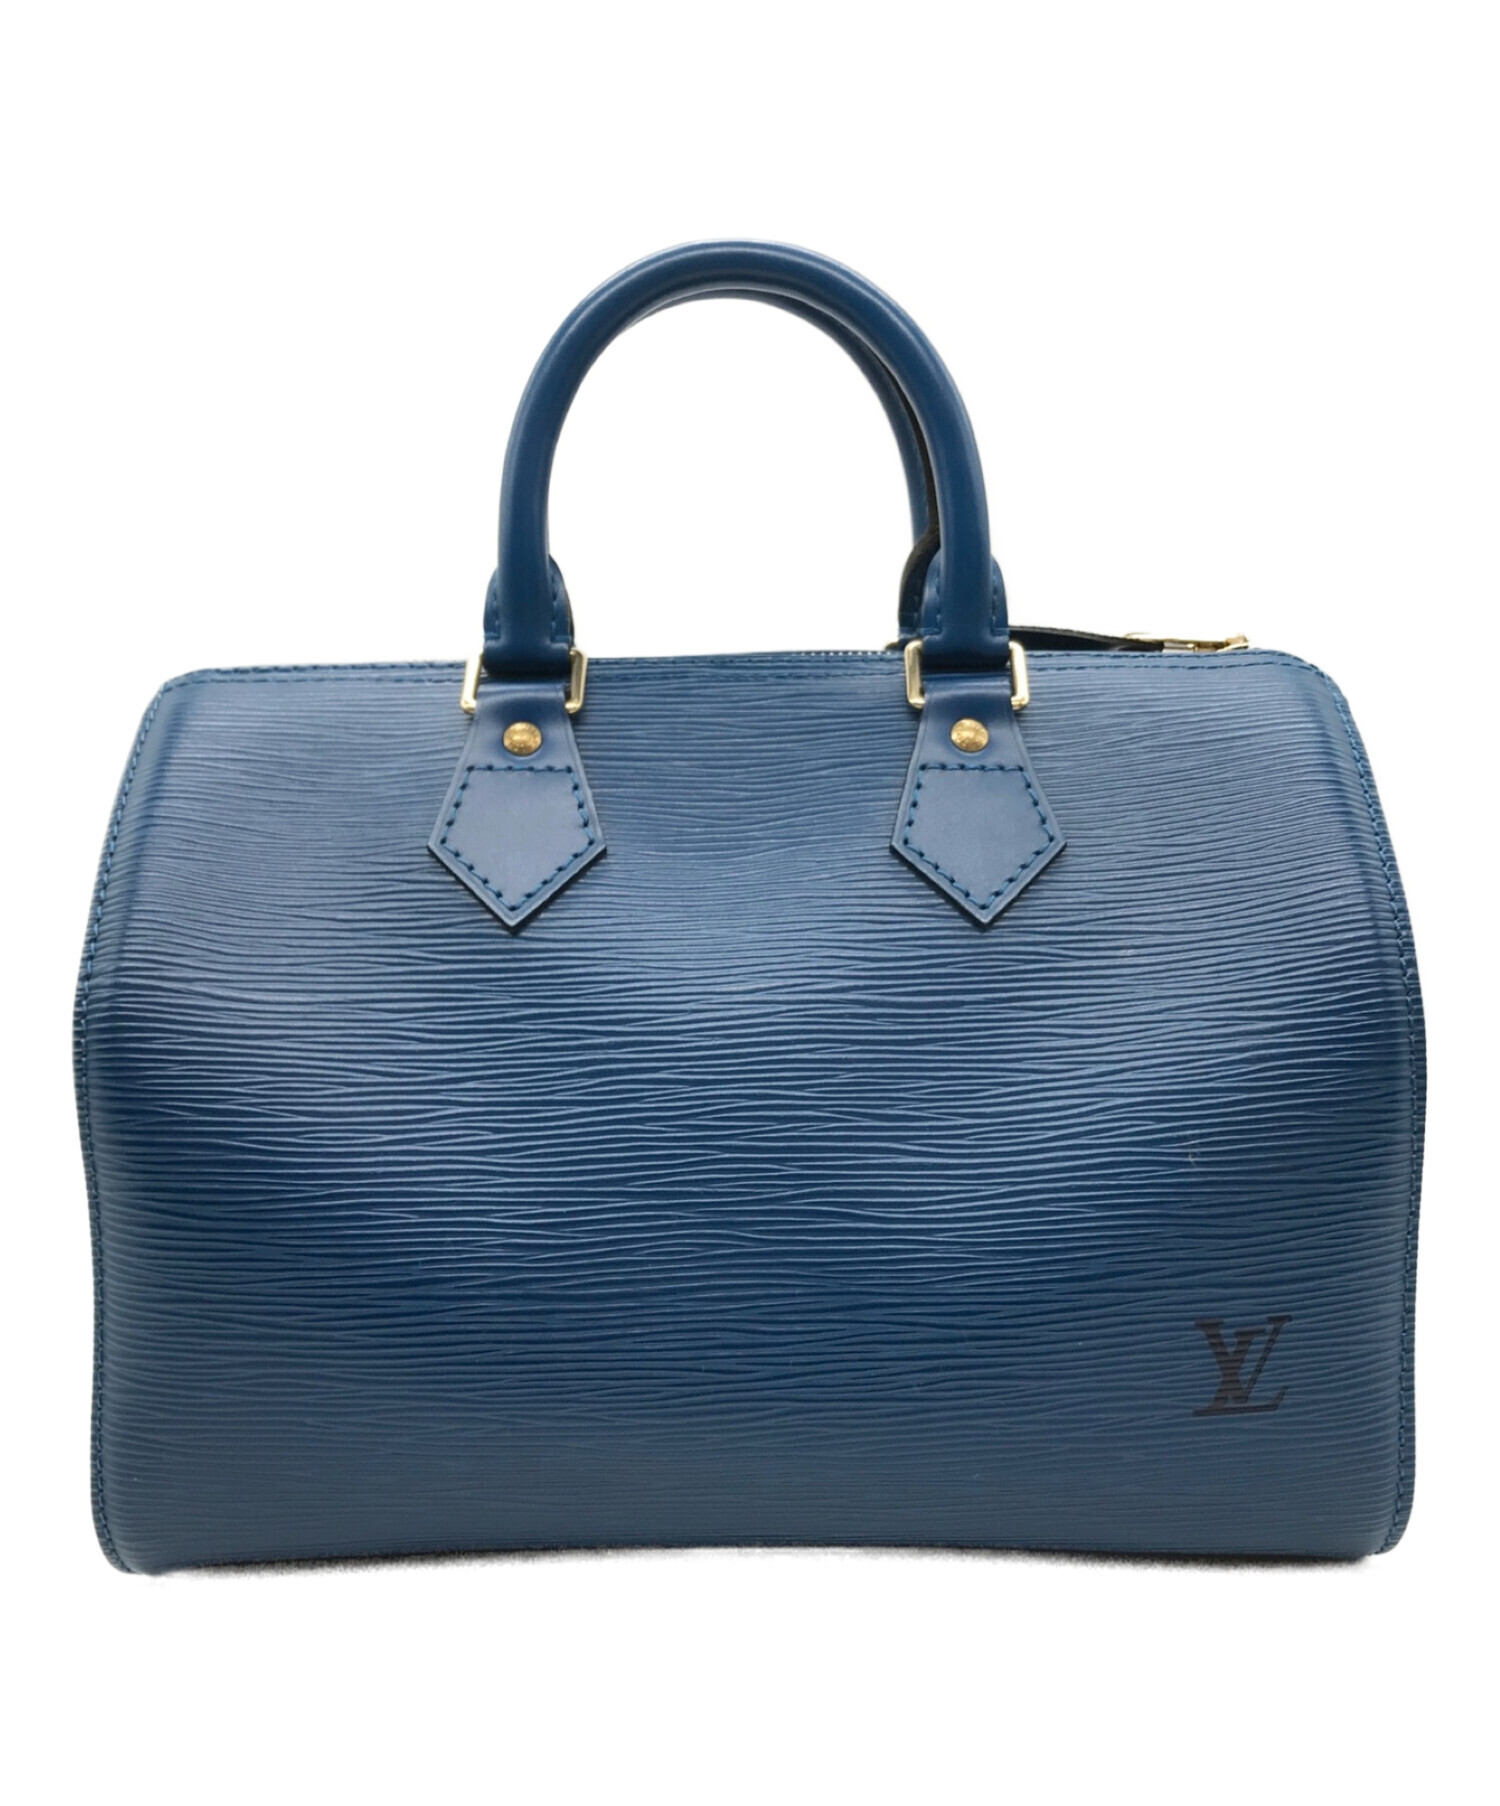 Louis Vuitton ルイヴィトン エピ スピーディ25 - ハンドバッグ